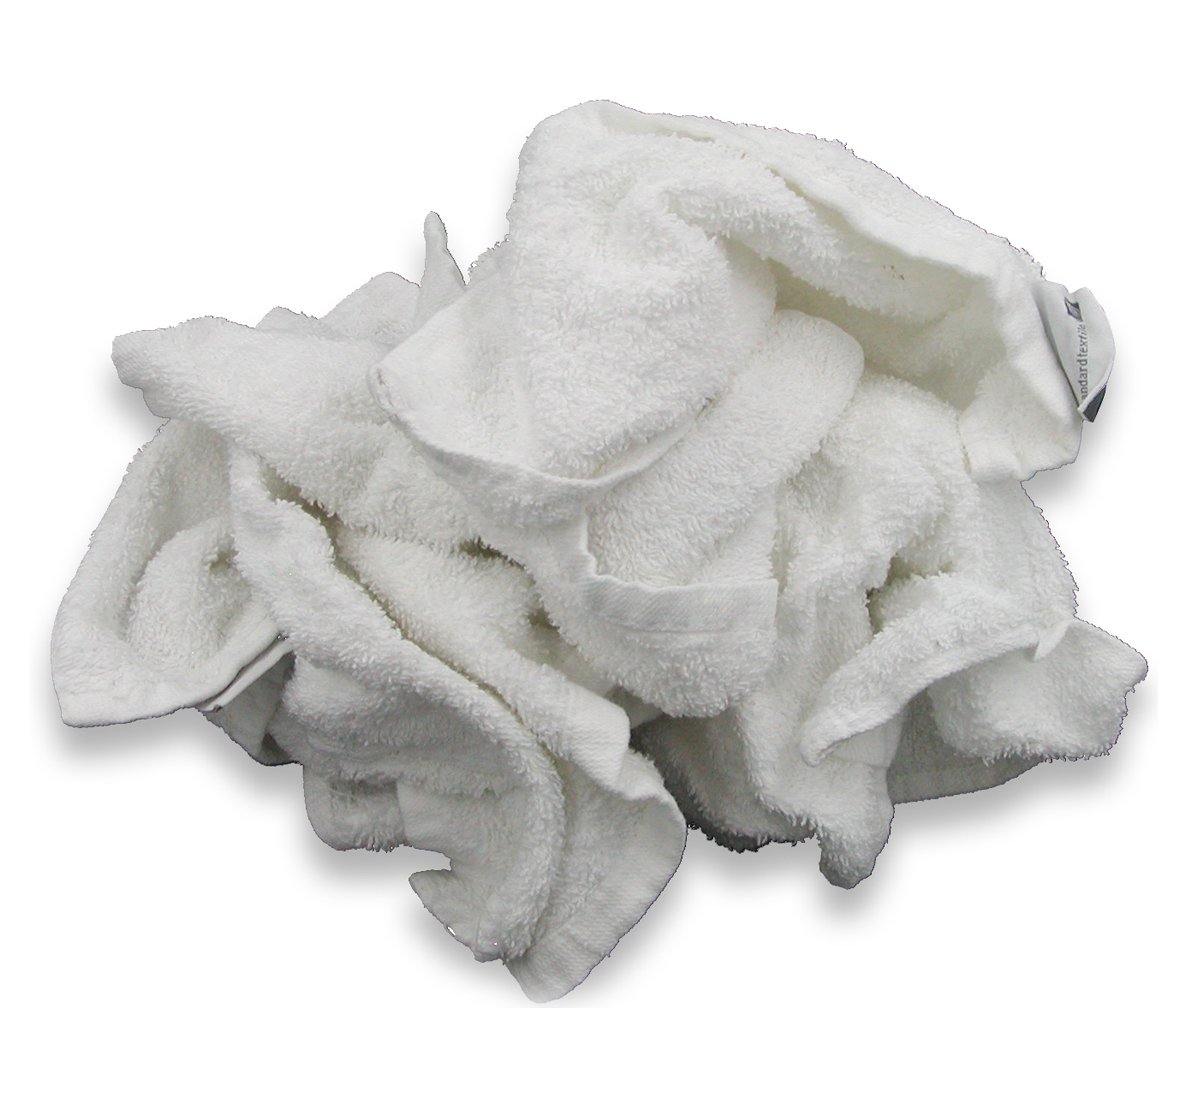 White Washcloths – A&A Wiping Cloth